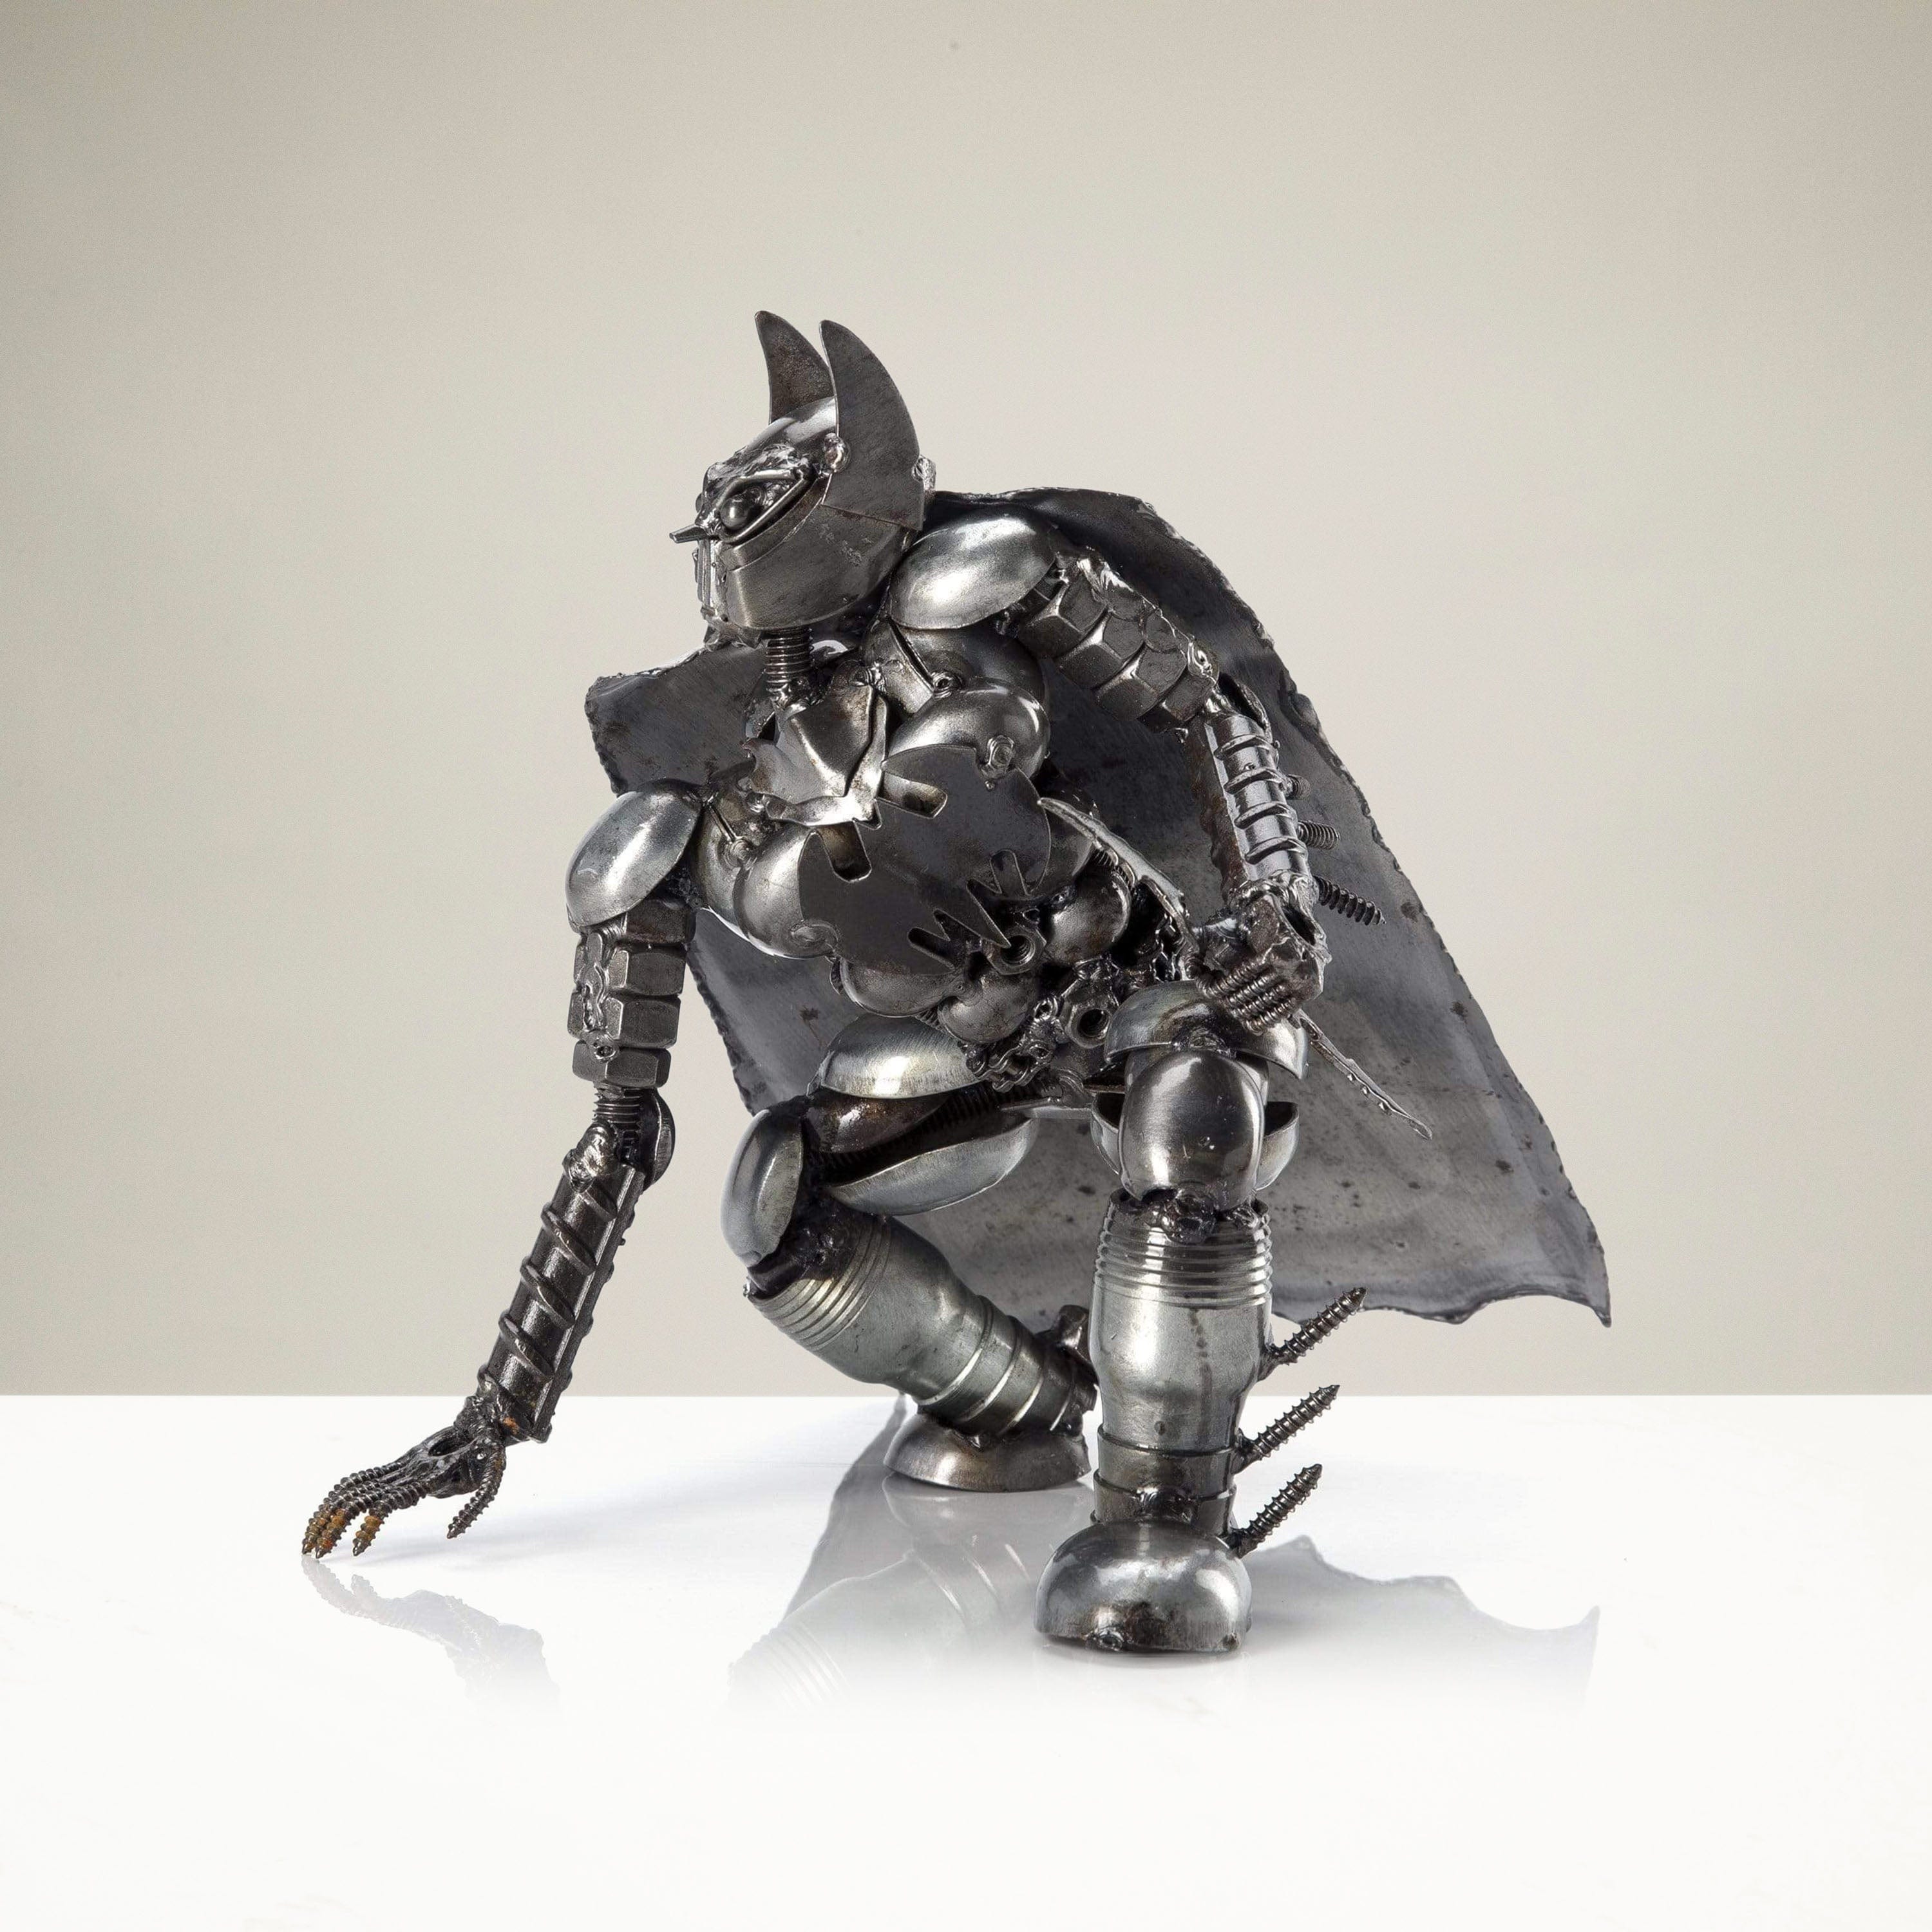 Kalifano Recycled Metal Art Batman with Batarang Inspired Recycled Metal Sculpture RMS-700BMB-N